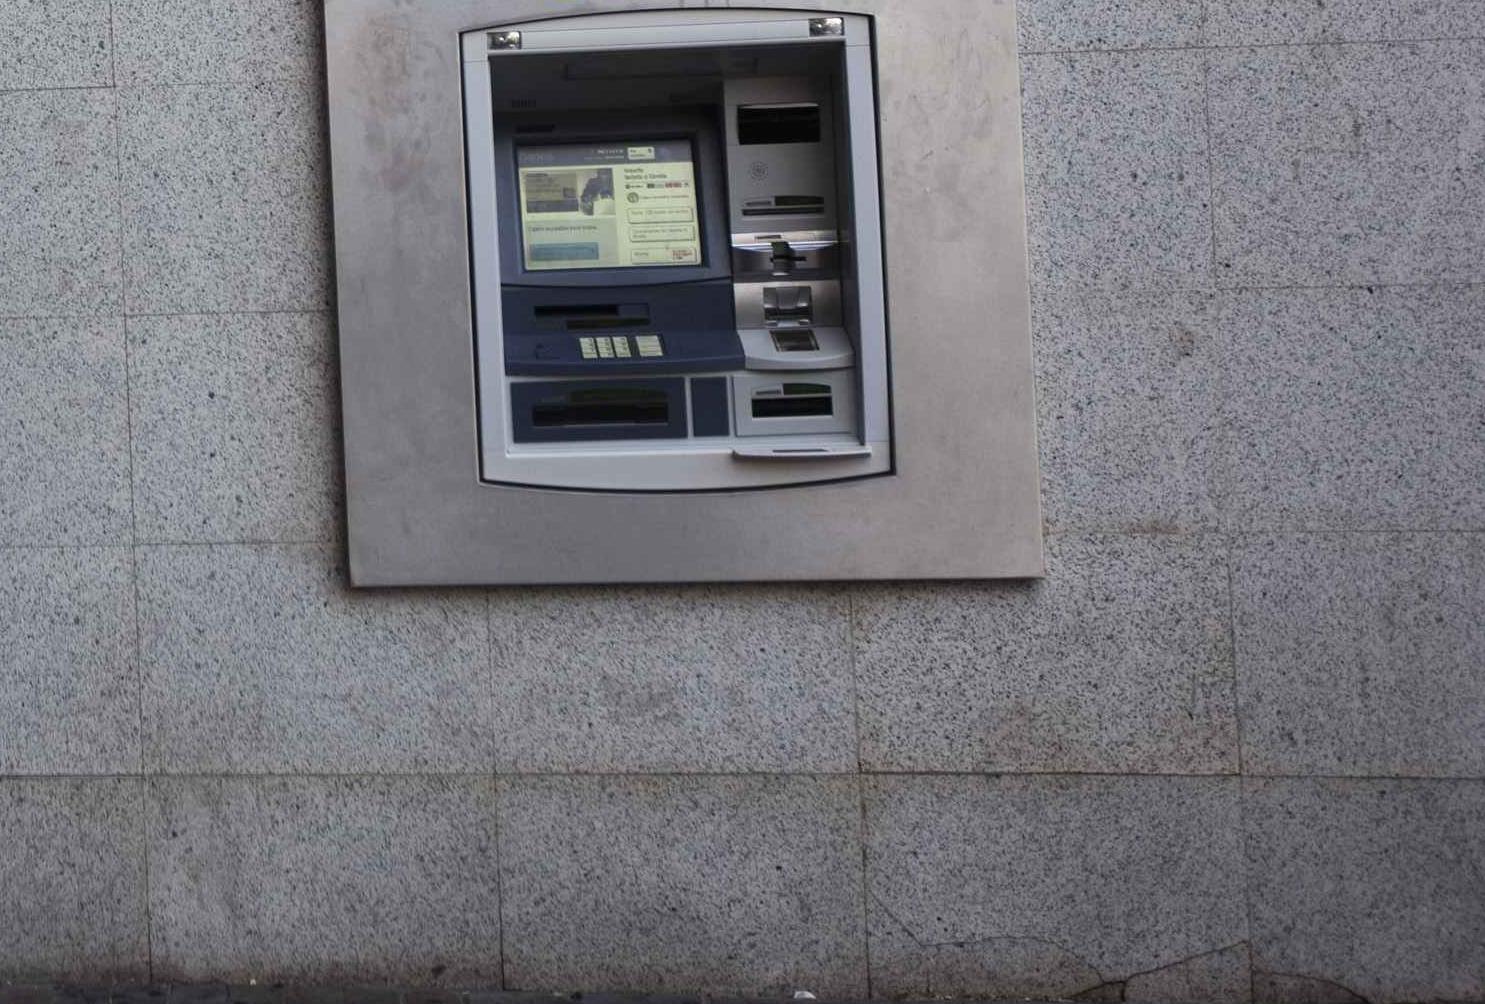 To ATM τρελάθηκε και μοίραζε λεφτά σε πόλη της Βρετανίας